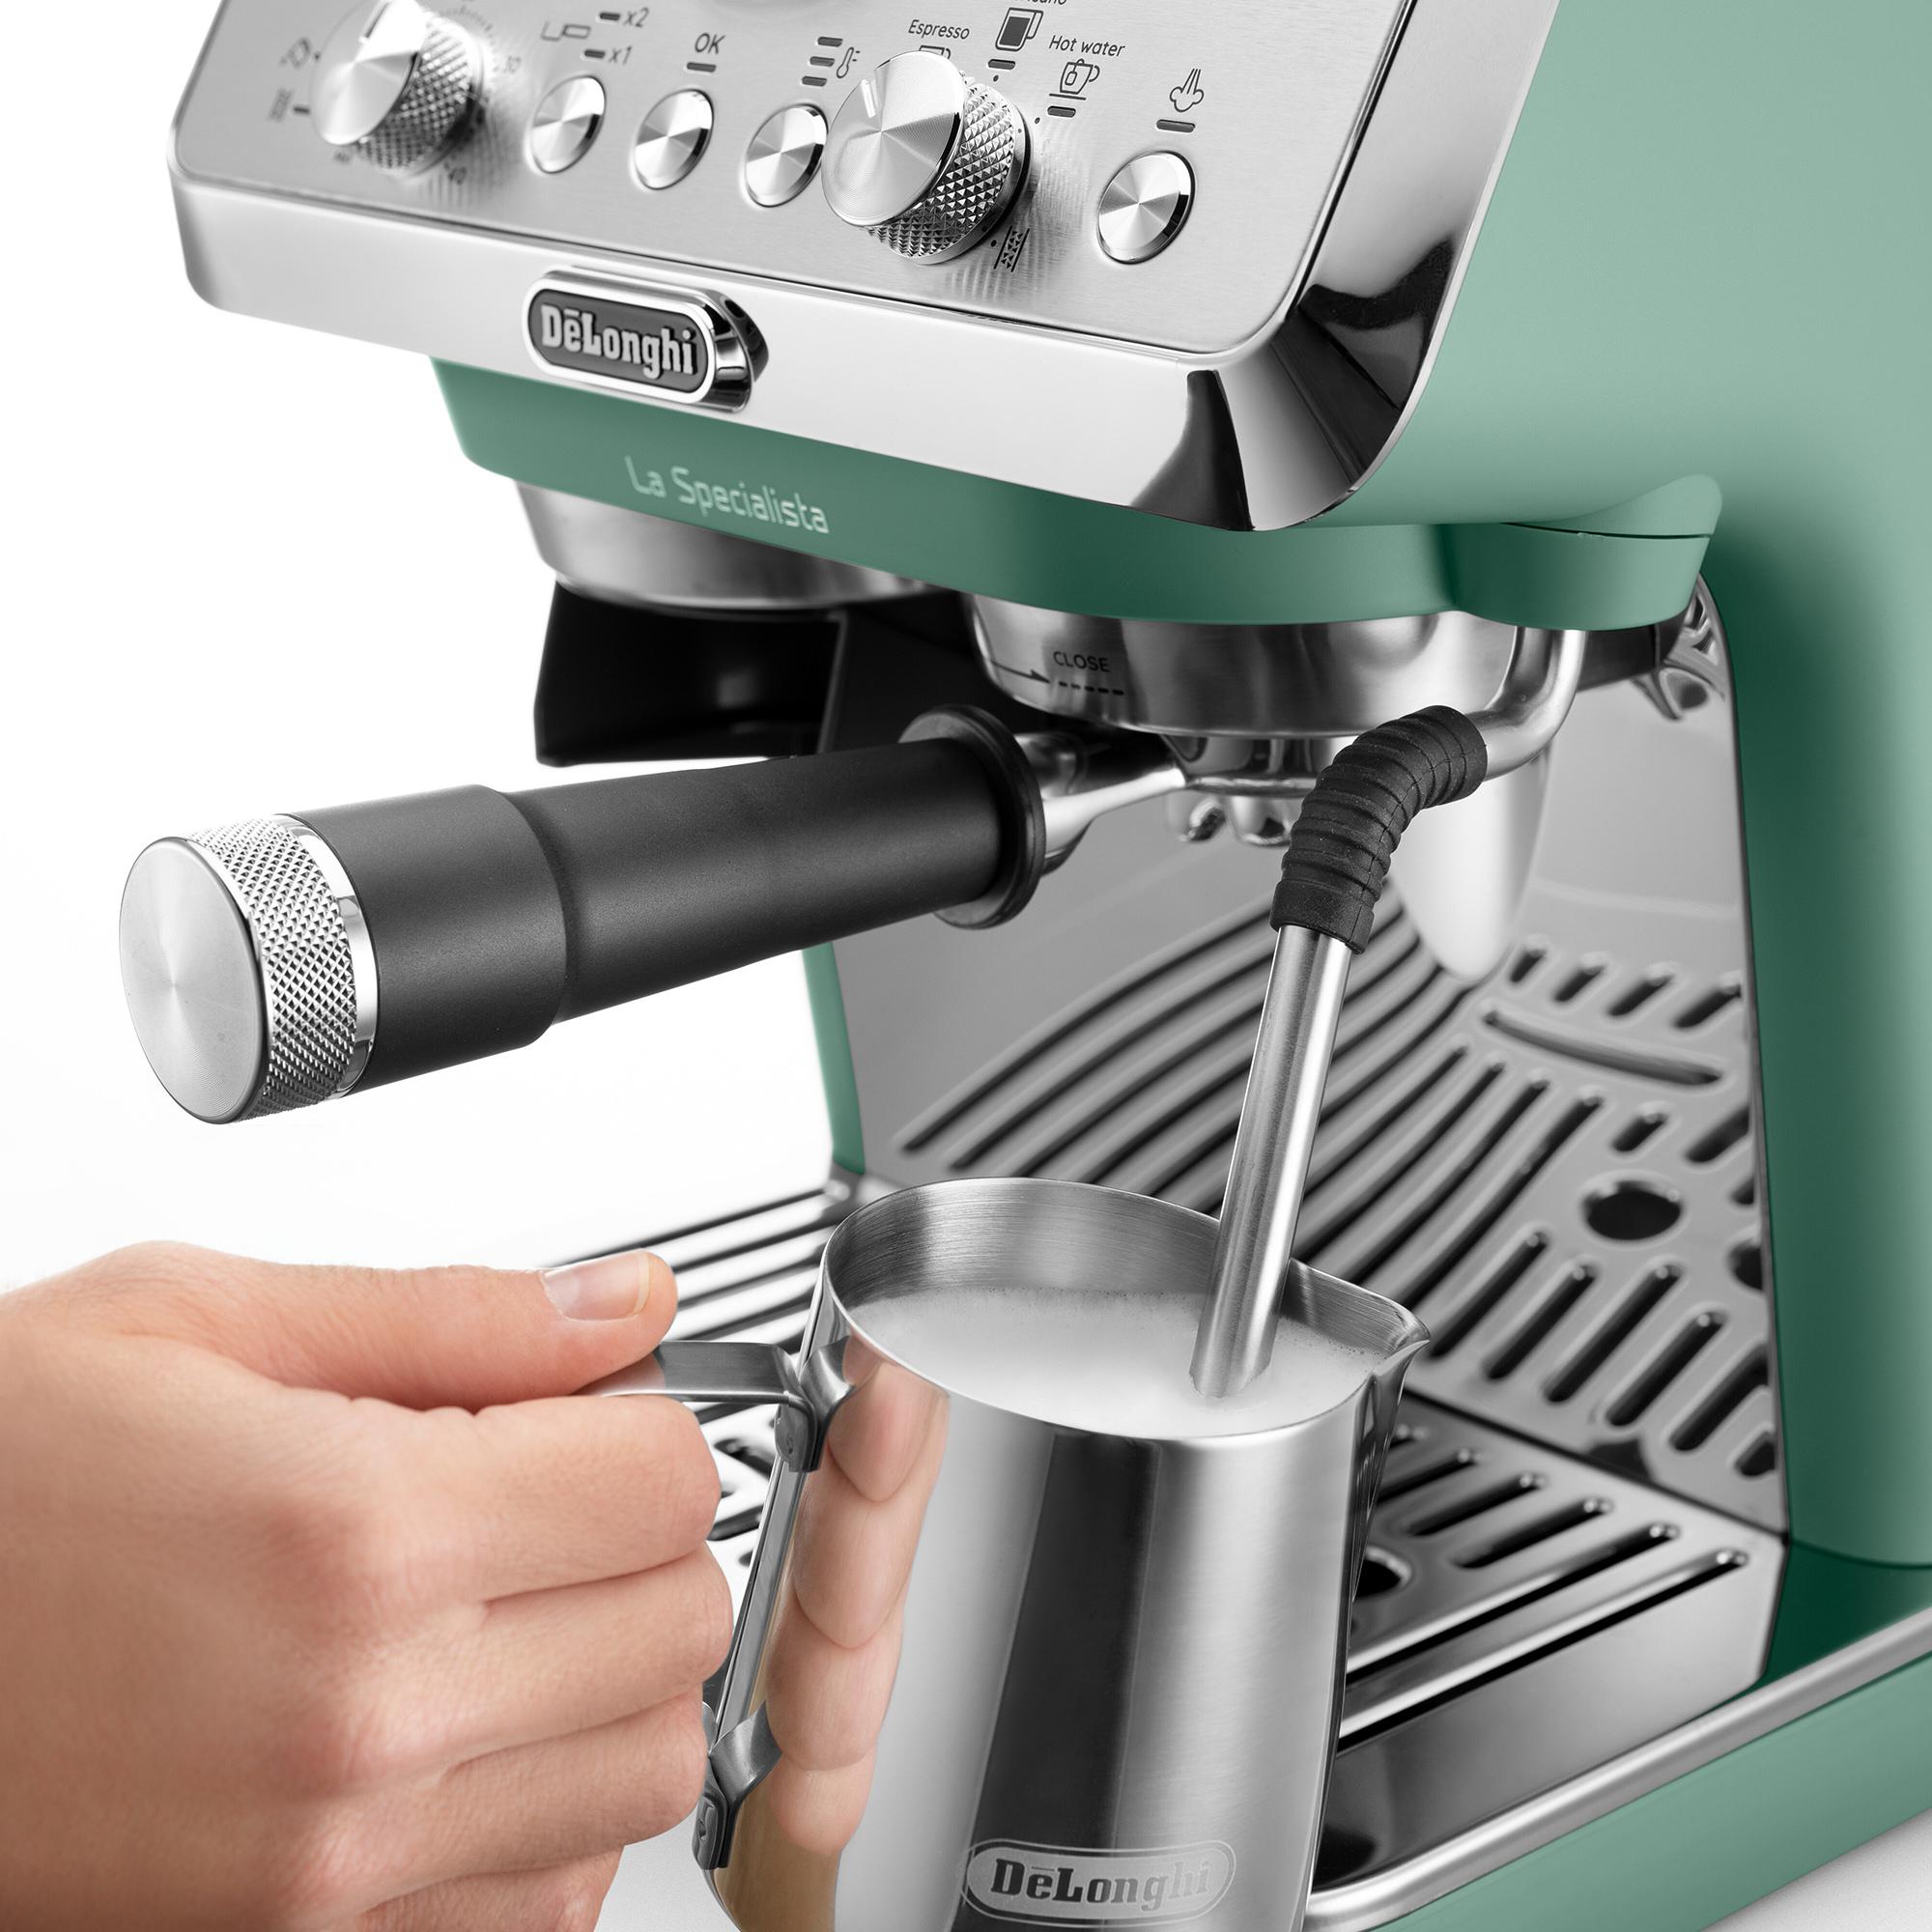 DeLonghi La Specialista Arte EC9155GR Espresso Coffee Machine Toronto Green Image 6